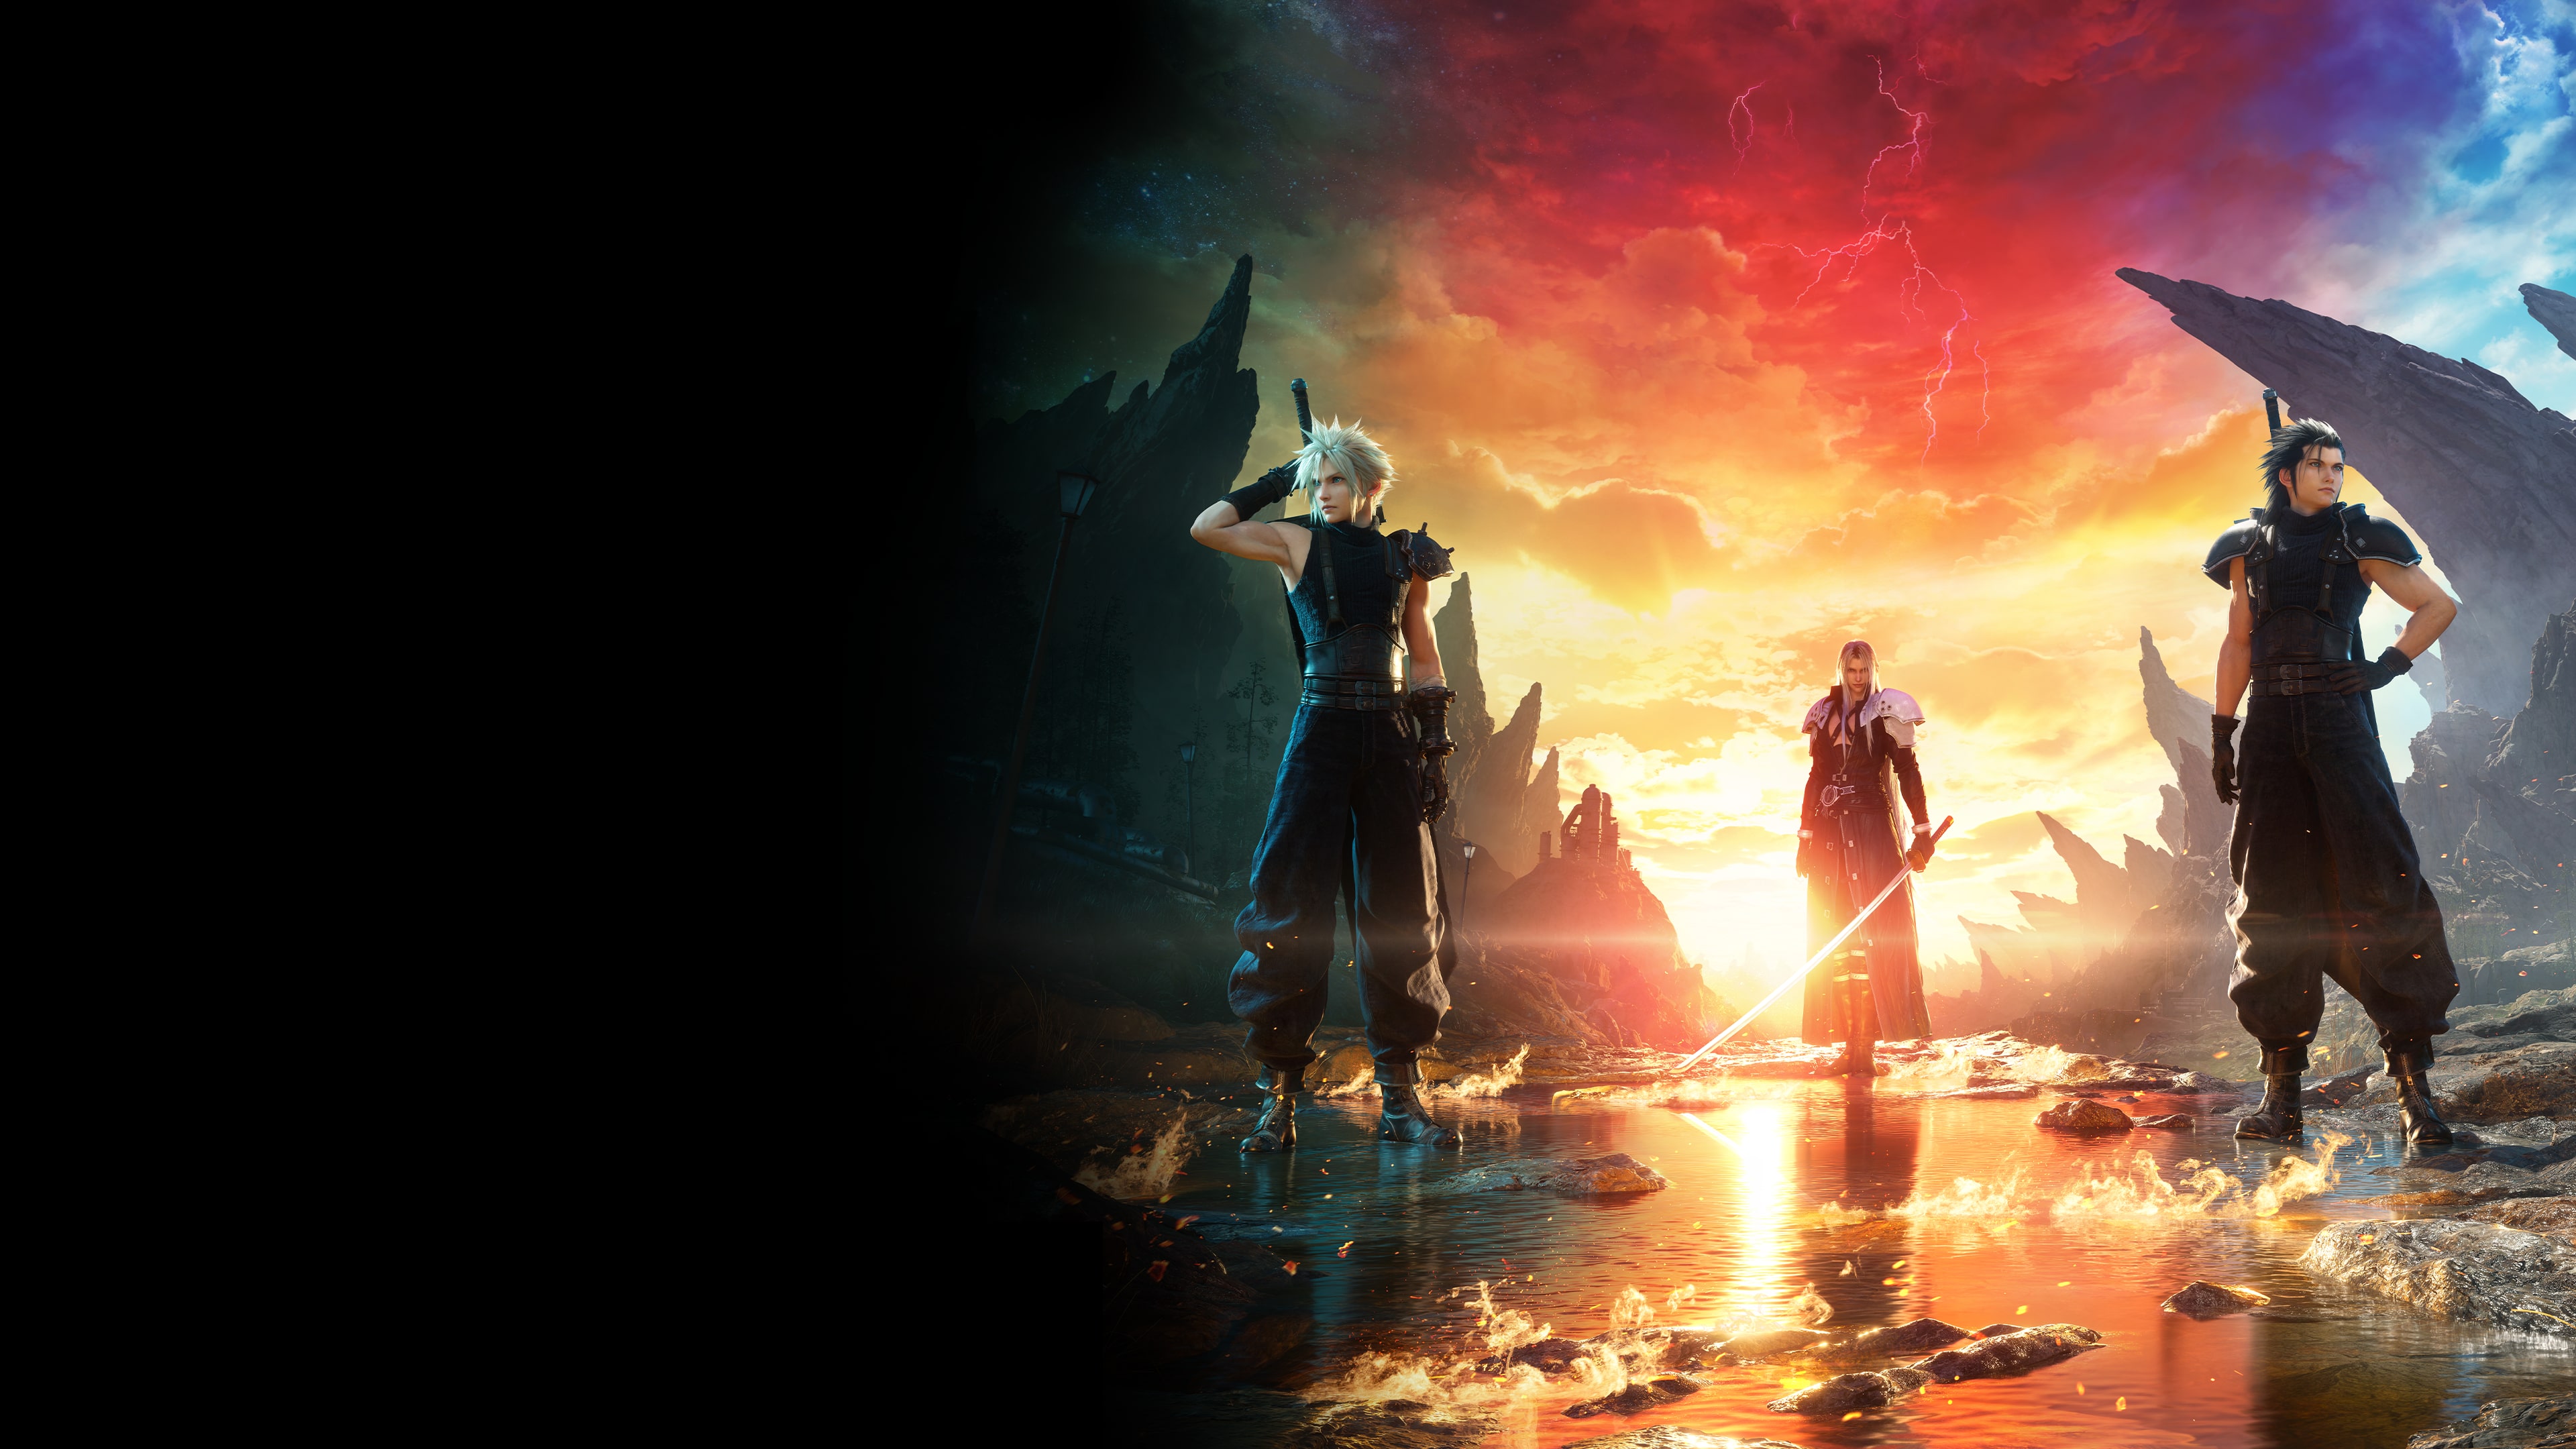 Final Fantasy VII: Rebirth